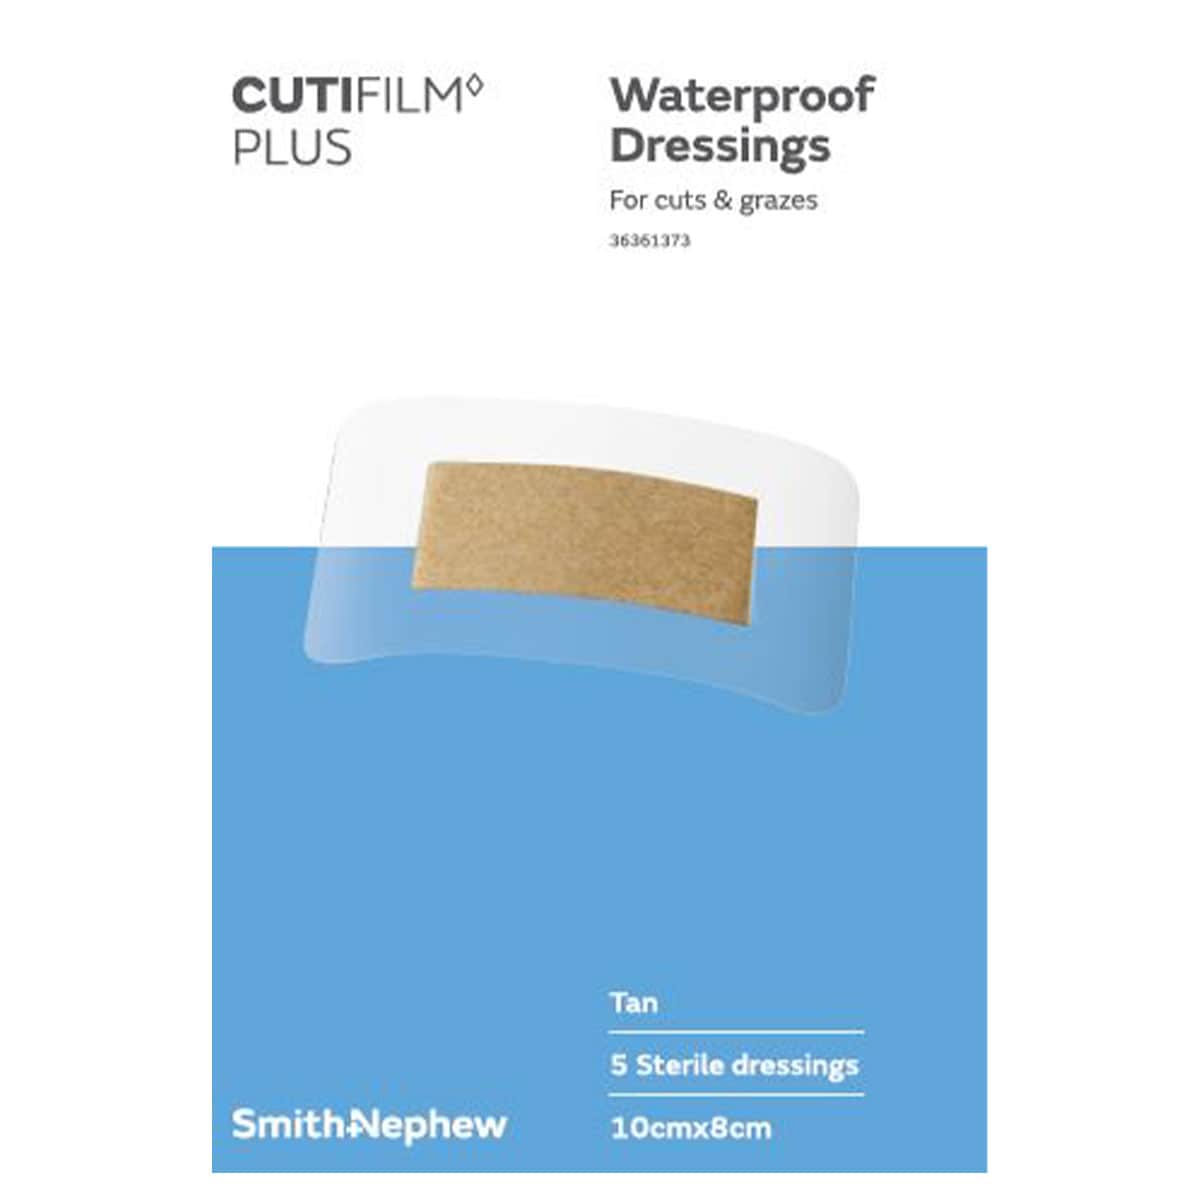 Cutifilm Plus Waterproof Dressing Tan 10cm x 8cm 5 Pack by Smith & Nephew